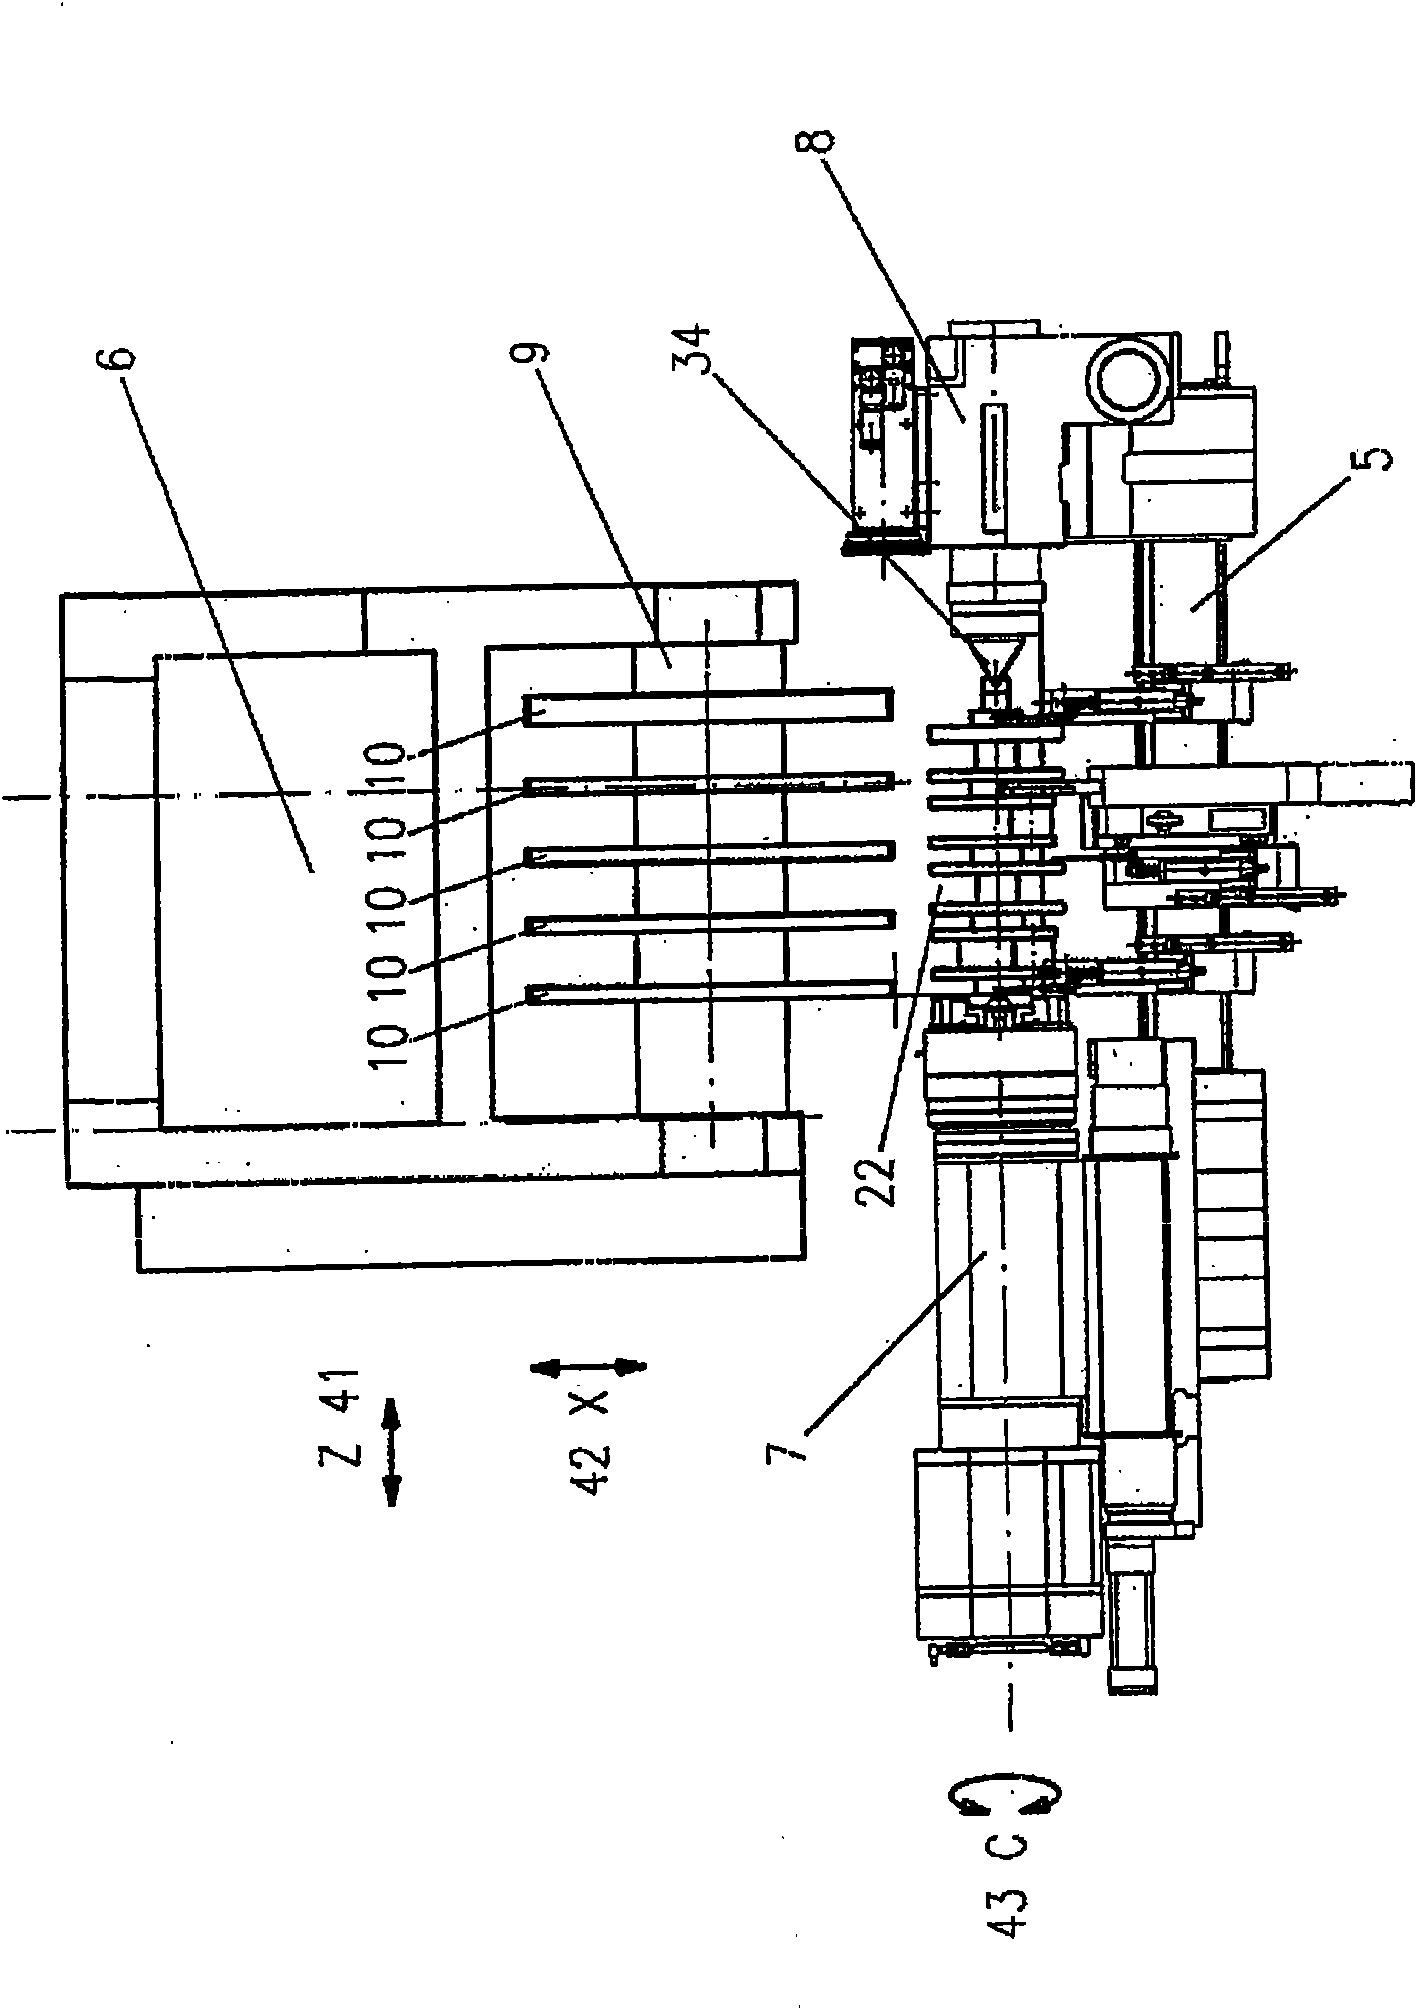 Grinding center and method for the simultaneous grinding of multiple crankshaft bearings